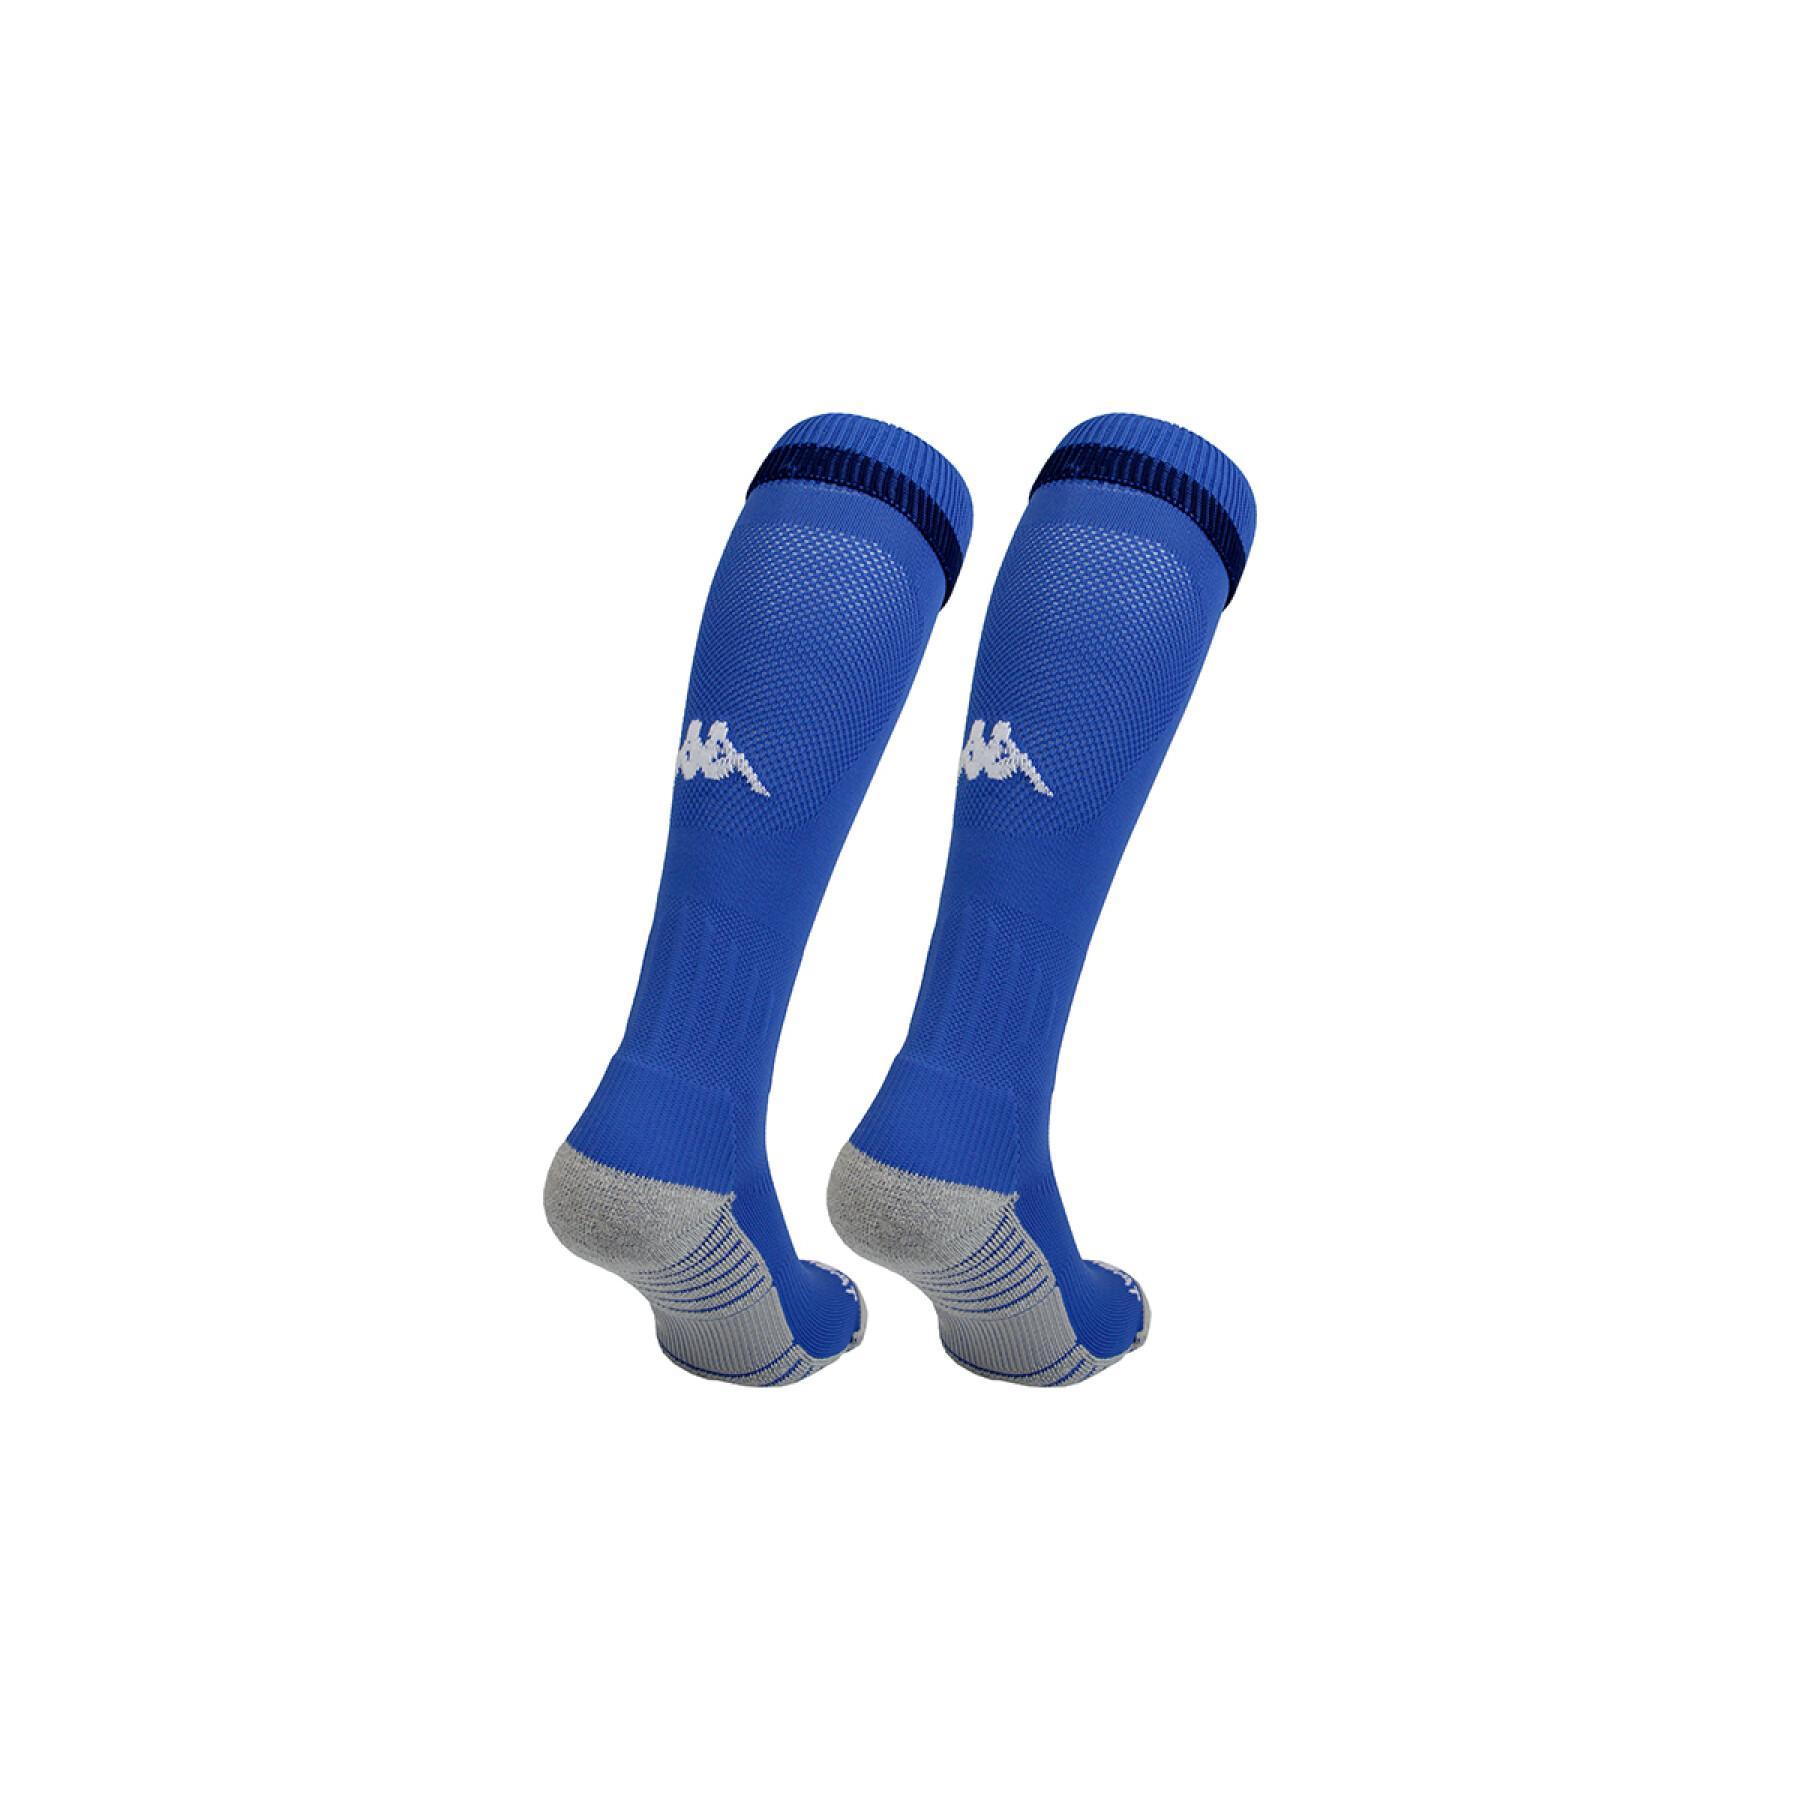 Socken Castres Olympique 2020/21 spark pro 3p